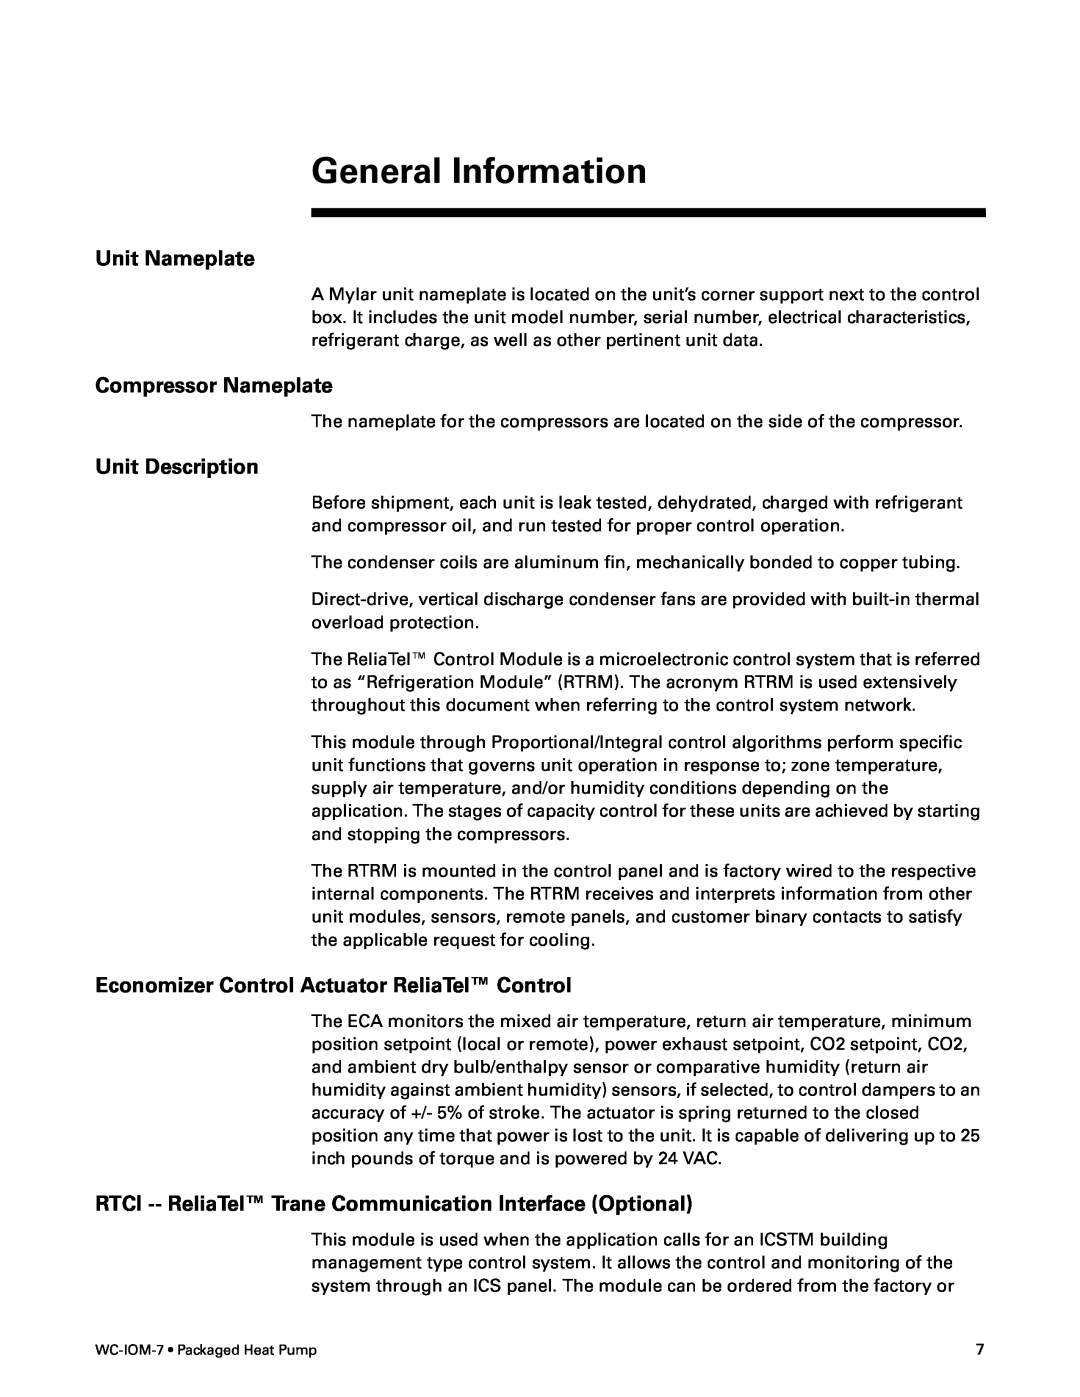 Trane WC-IOM-7 manual General Information, Unit Nameplate, Compressor Nameplate, Unit Description 